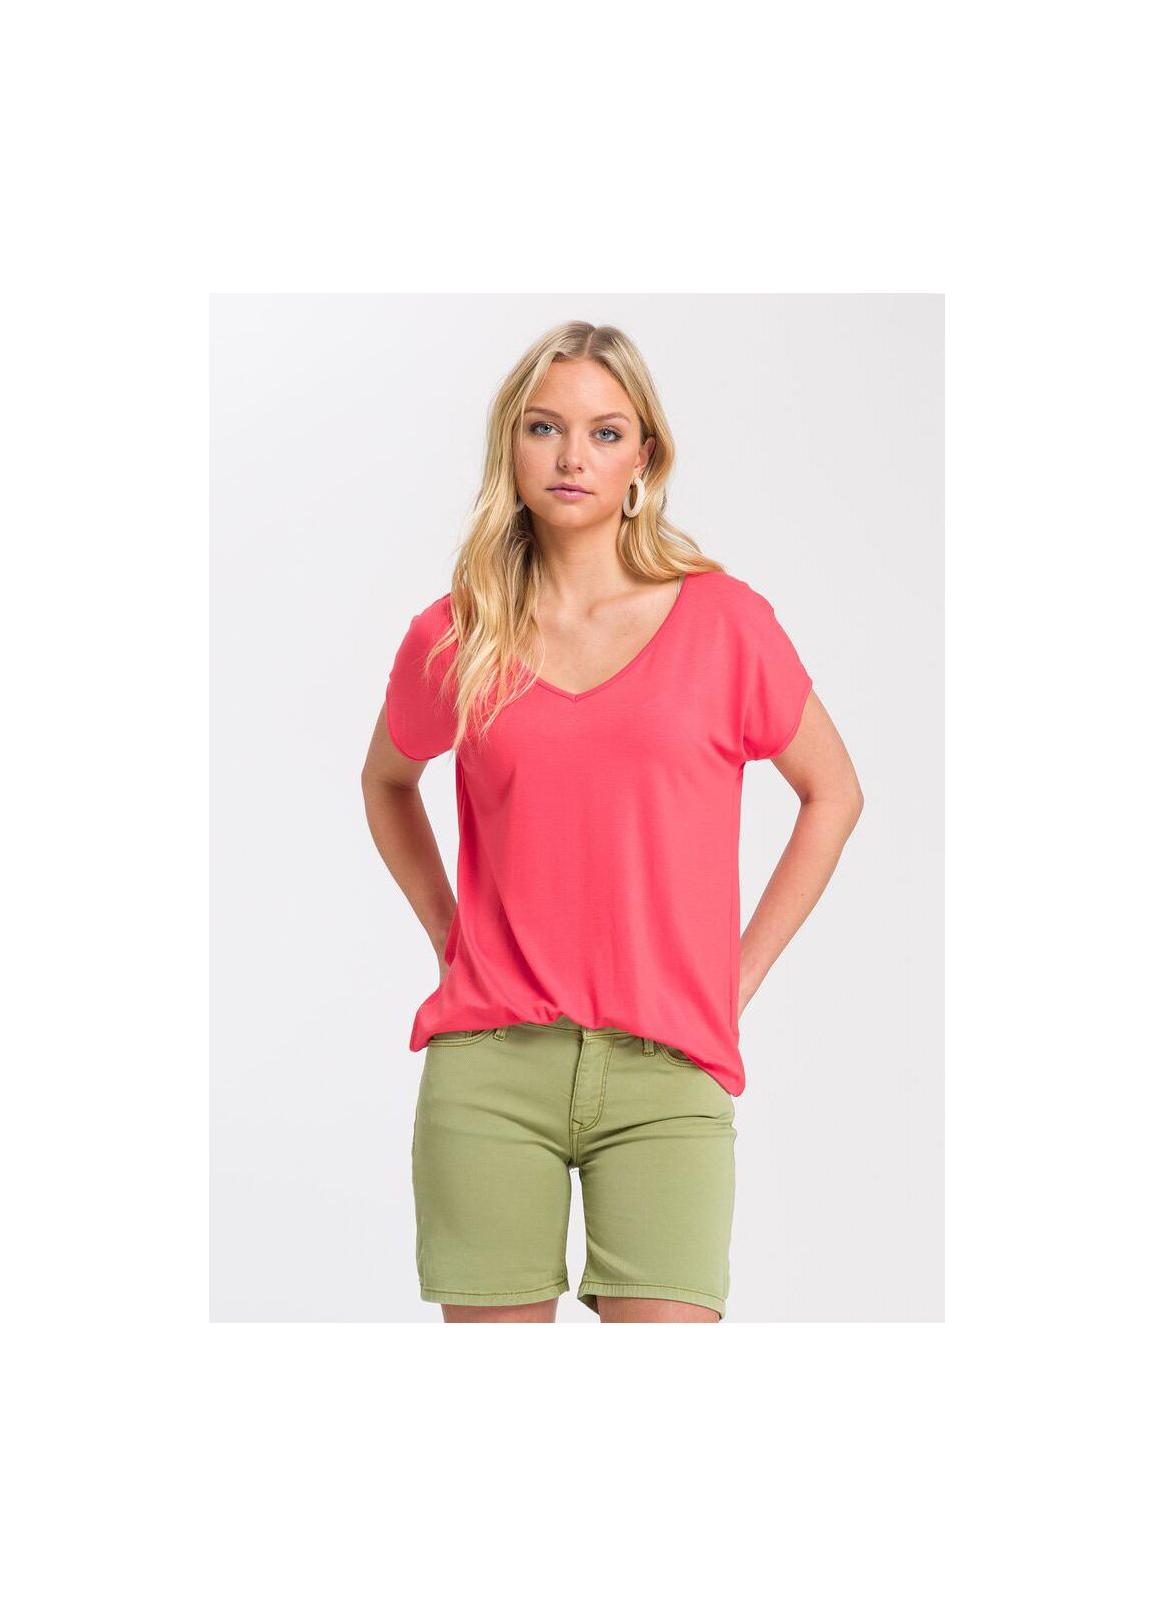 Cross Jeans® T-shirt V-Neck - Light Coral (571)